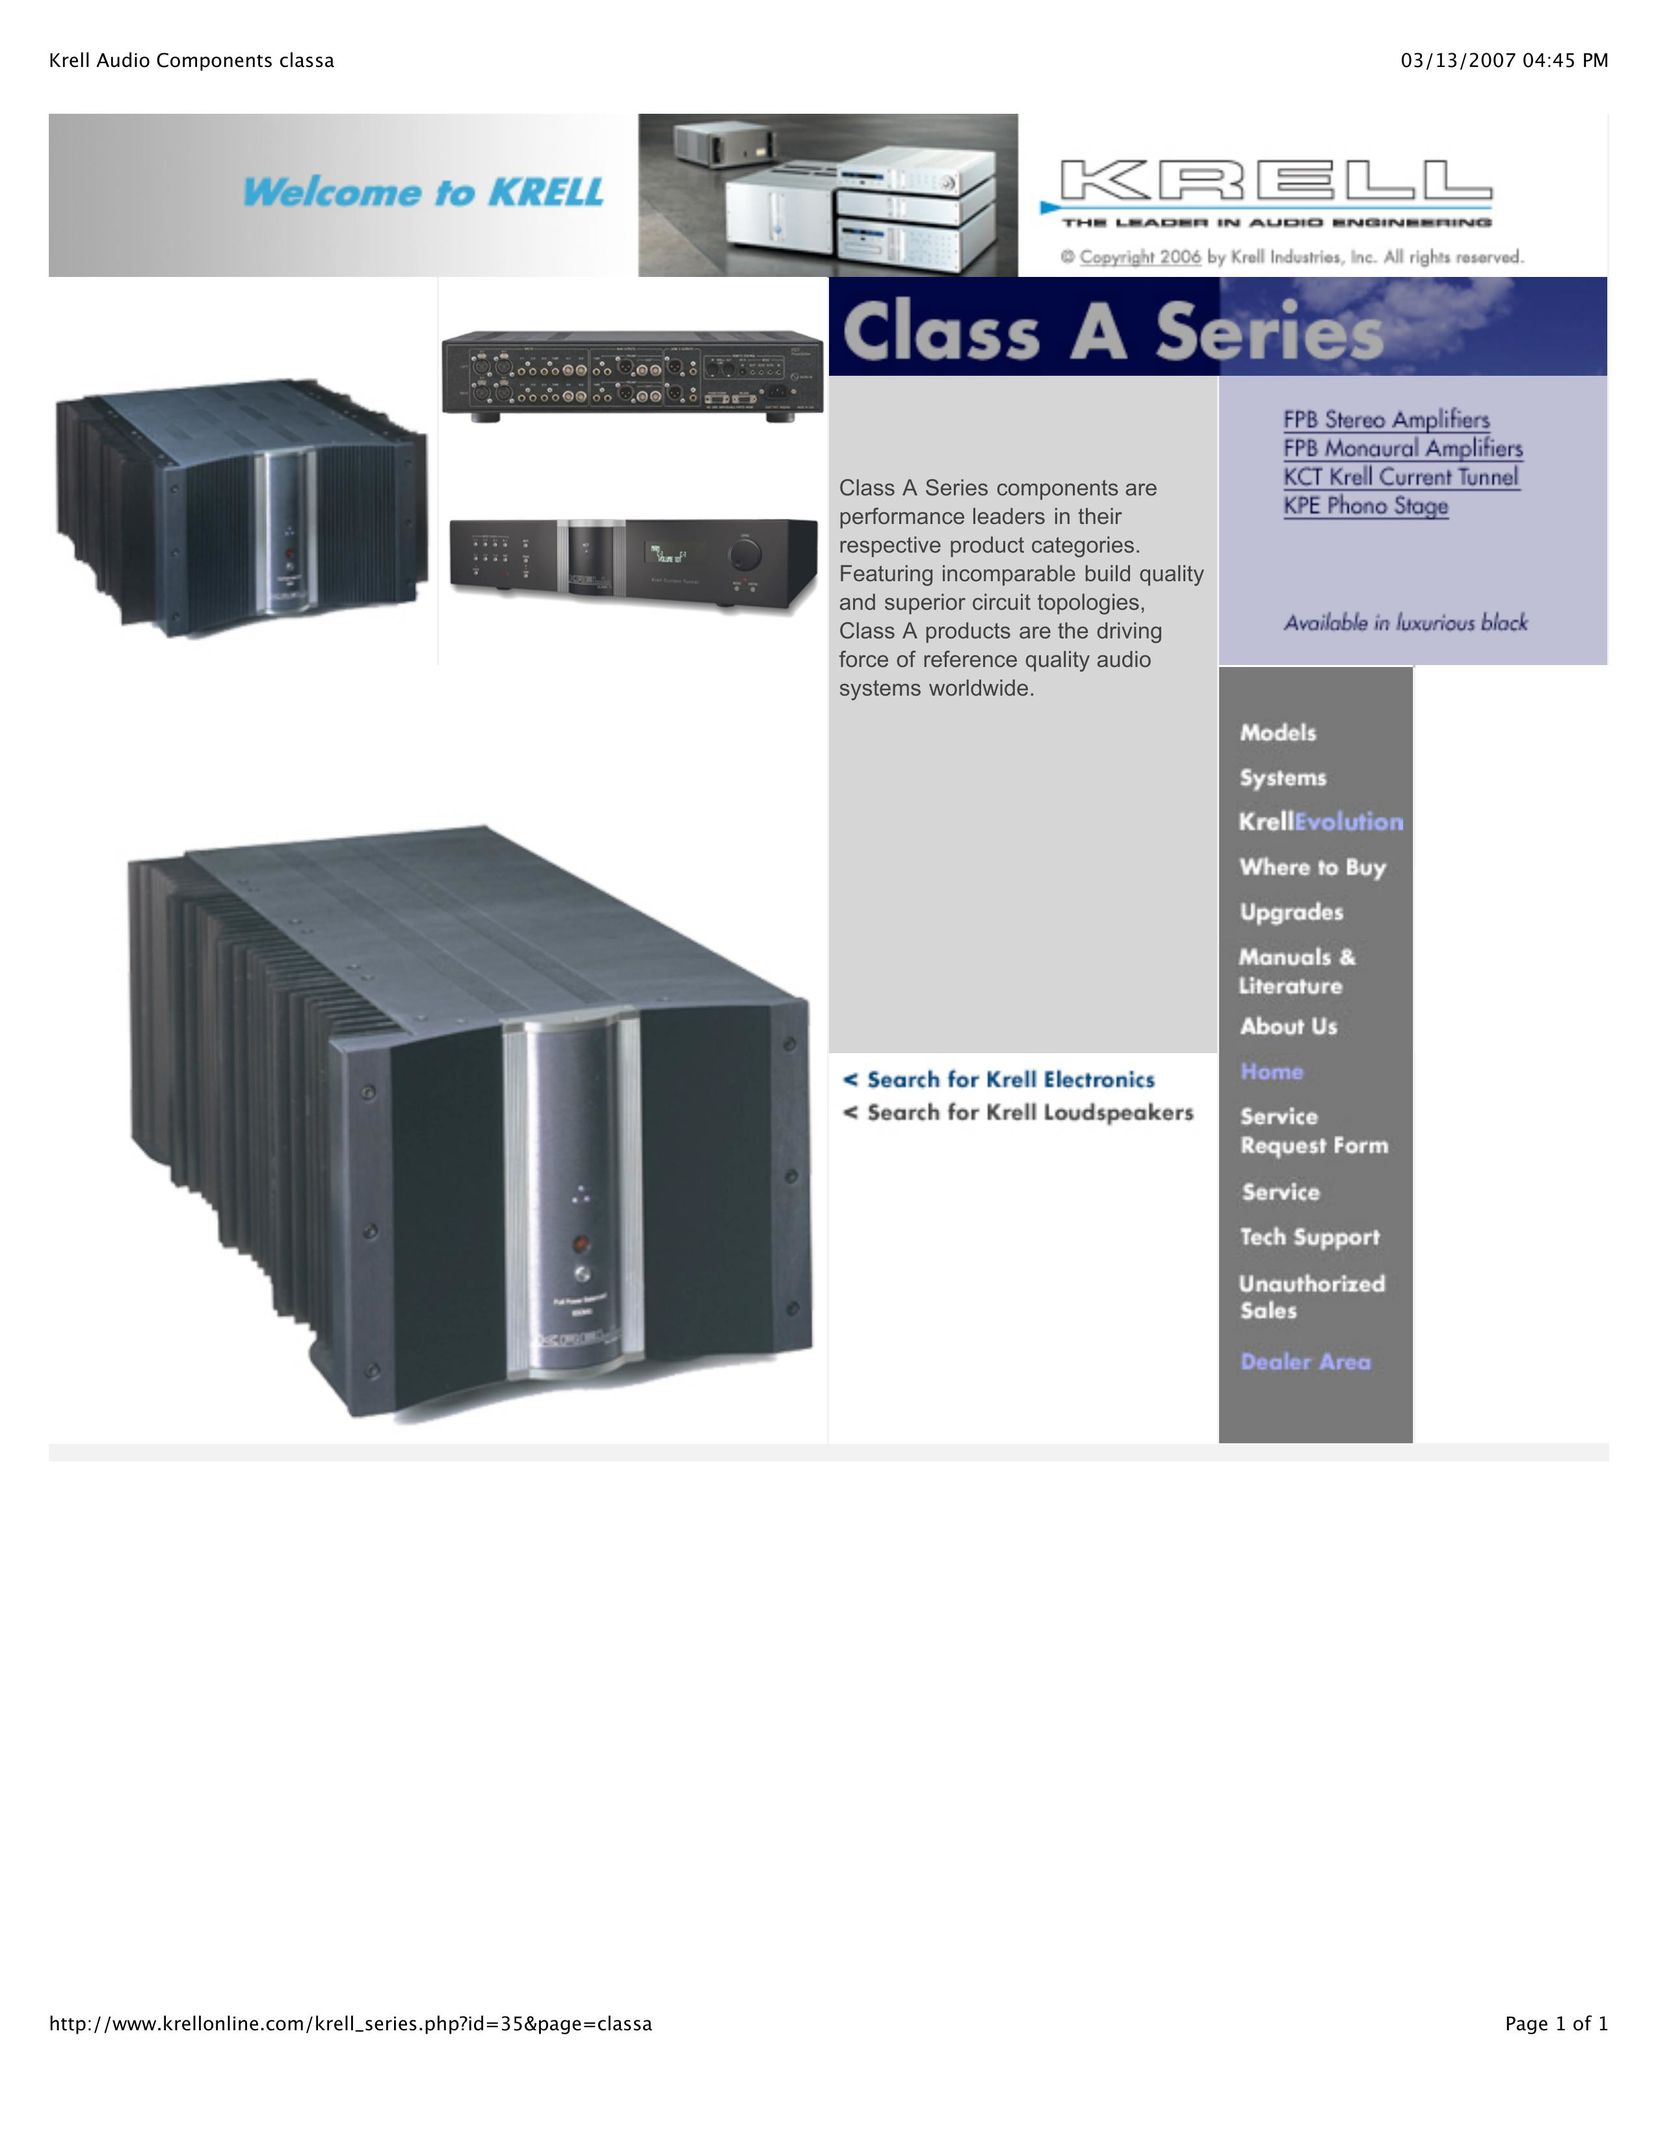 Krell Industries Class A Series Stereo Amplifier User Manual